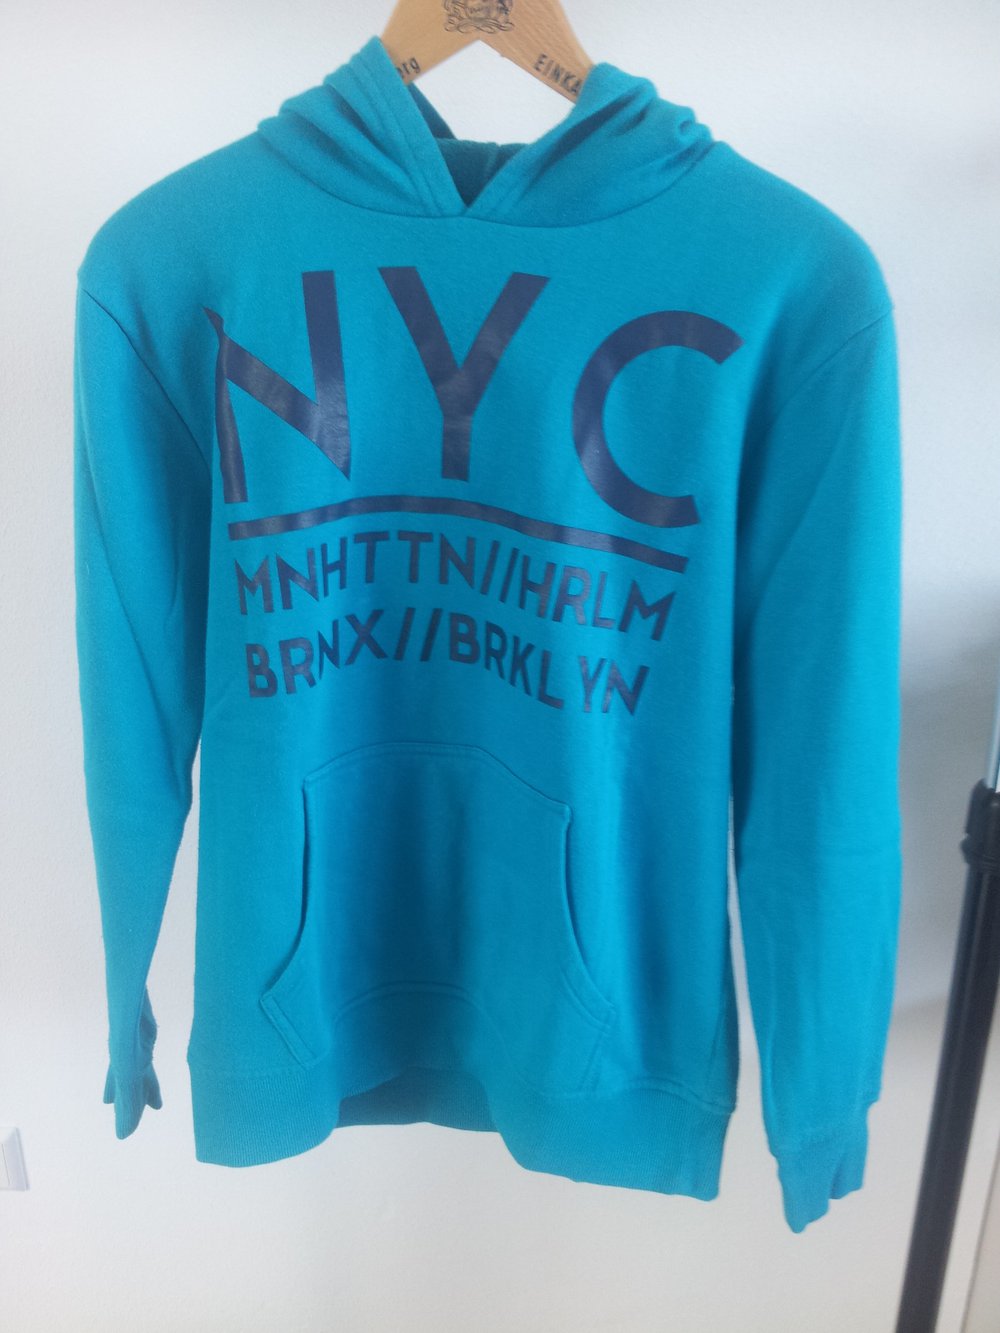 NYC Manhattan harlem bronx Brooklyn pullover